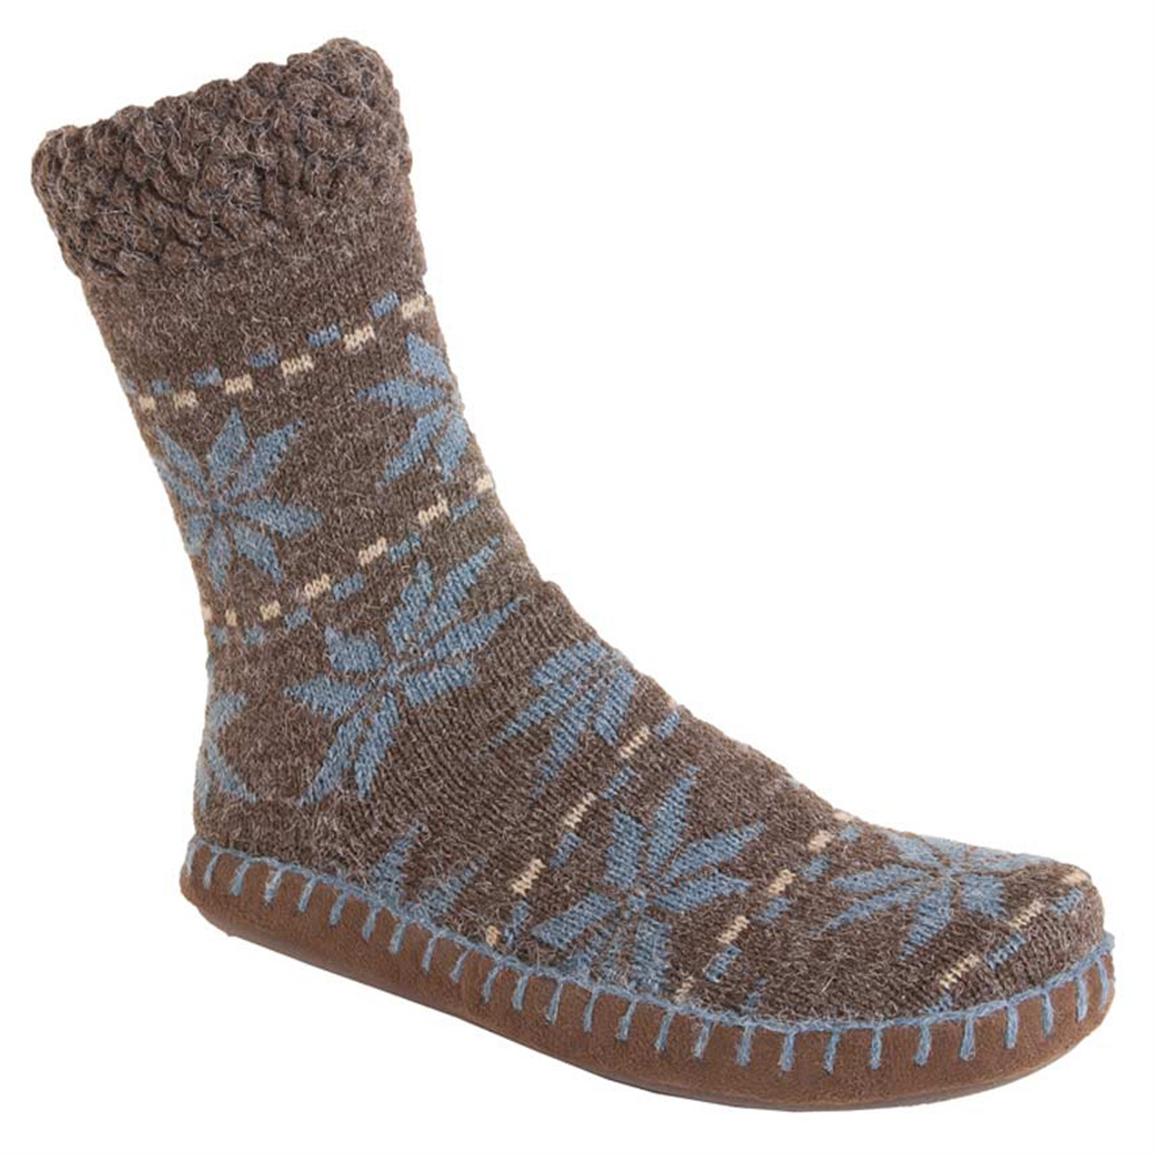 Woolrich Chimney Sock Slippers - 487399, Slippers